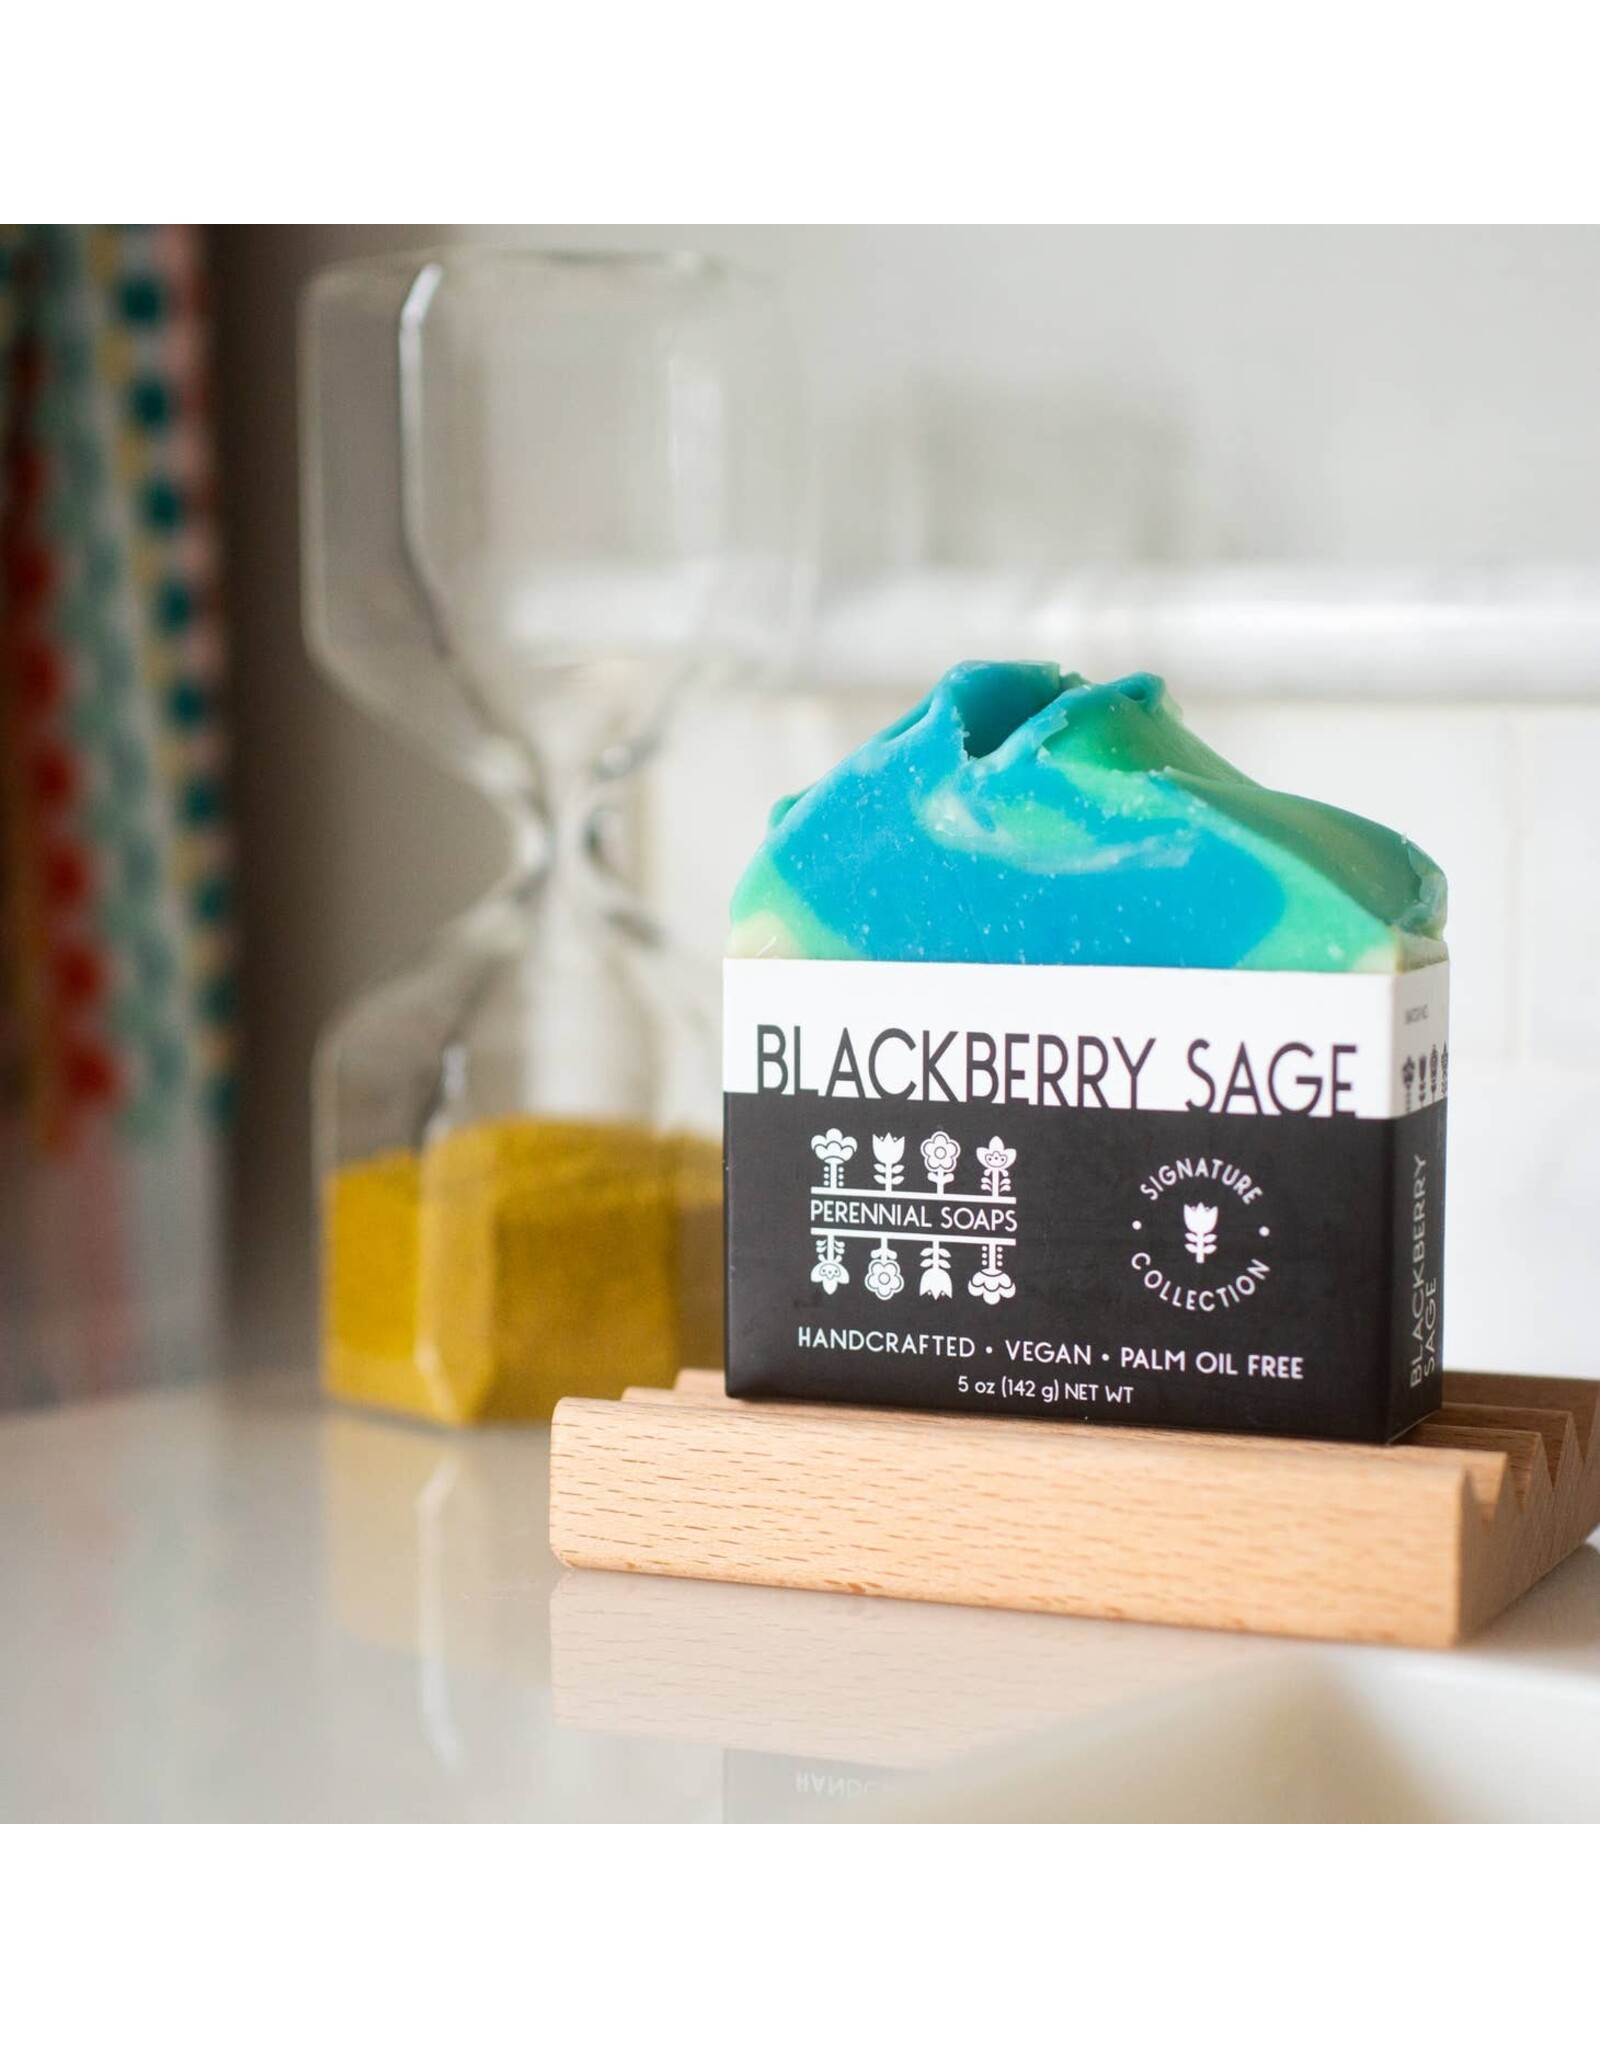 Perennial Soaps Blackberry Sage Bar Soap